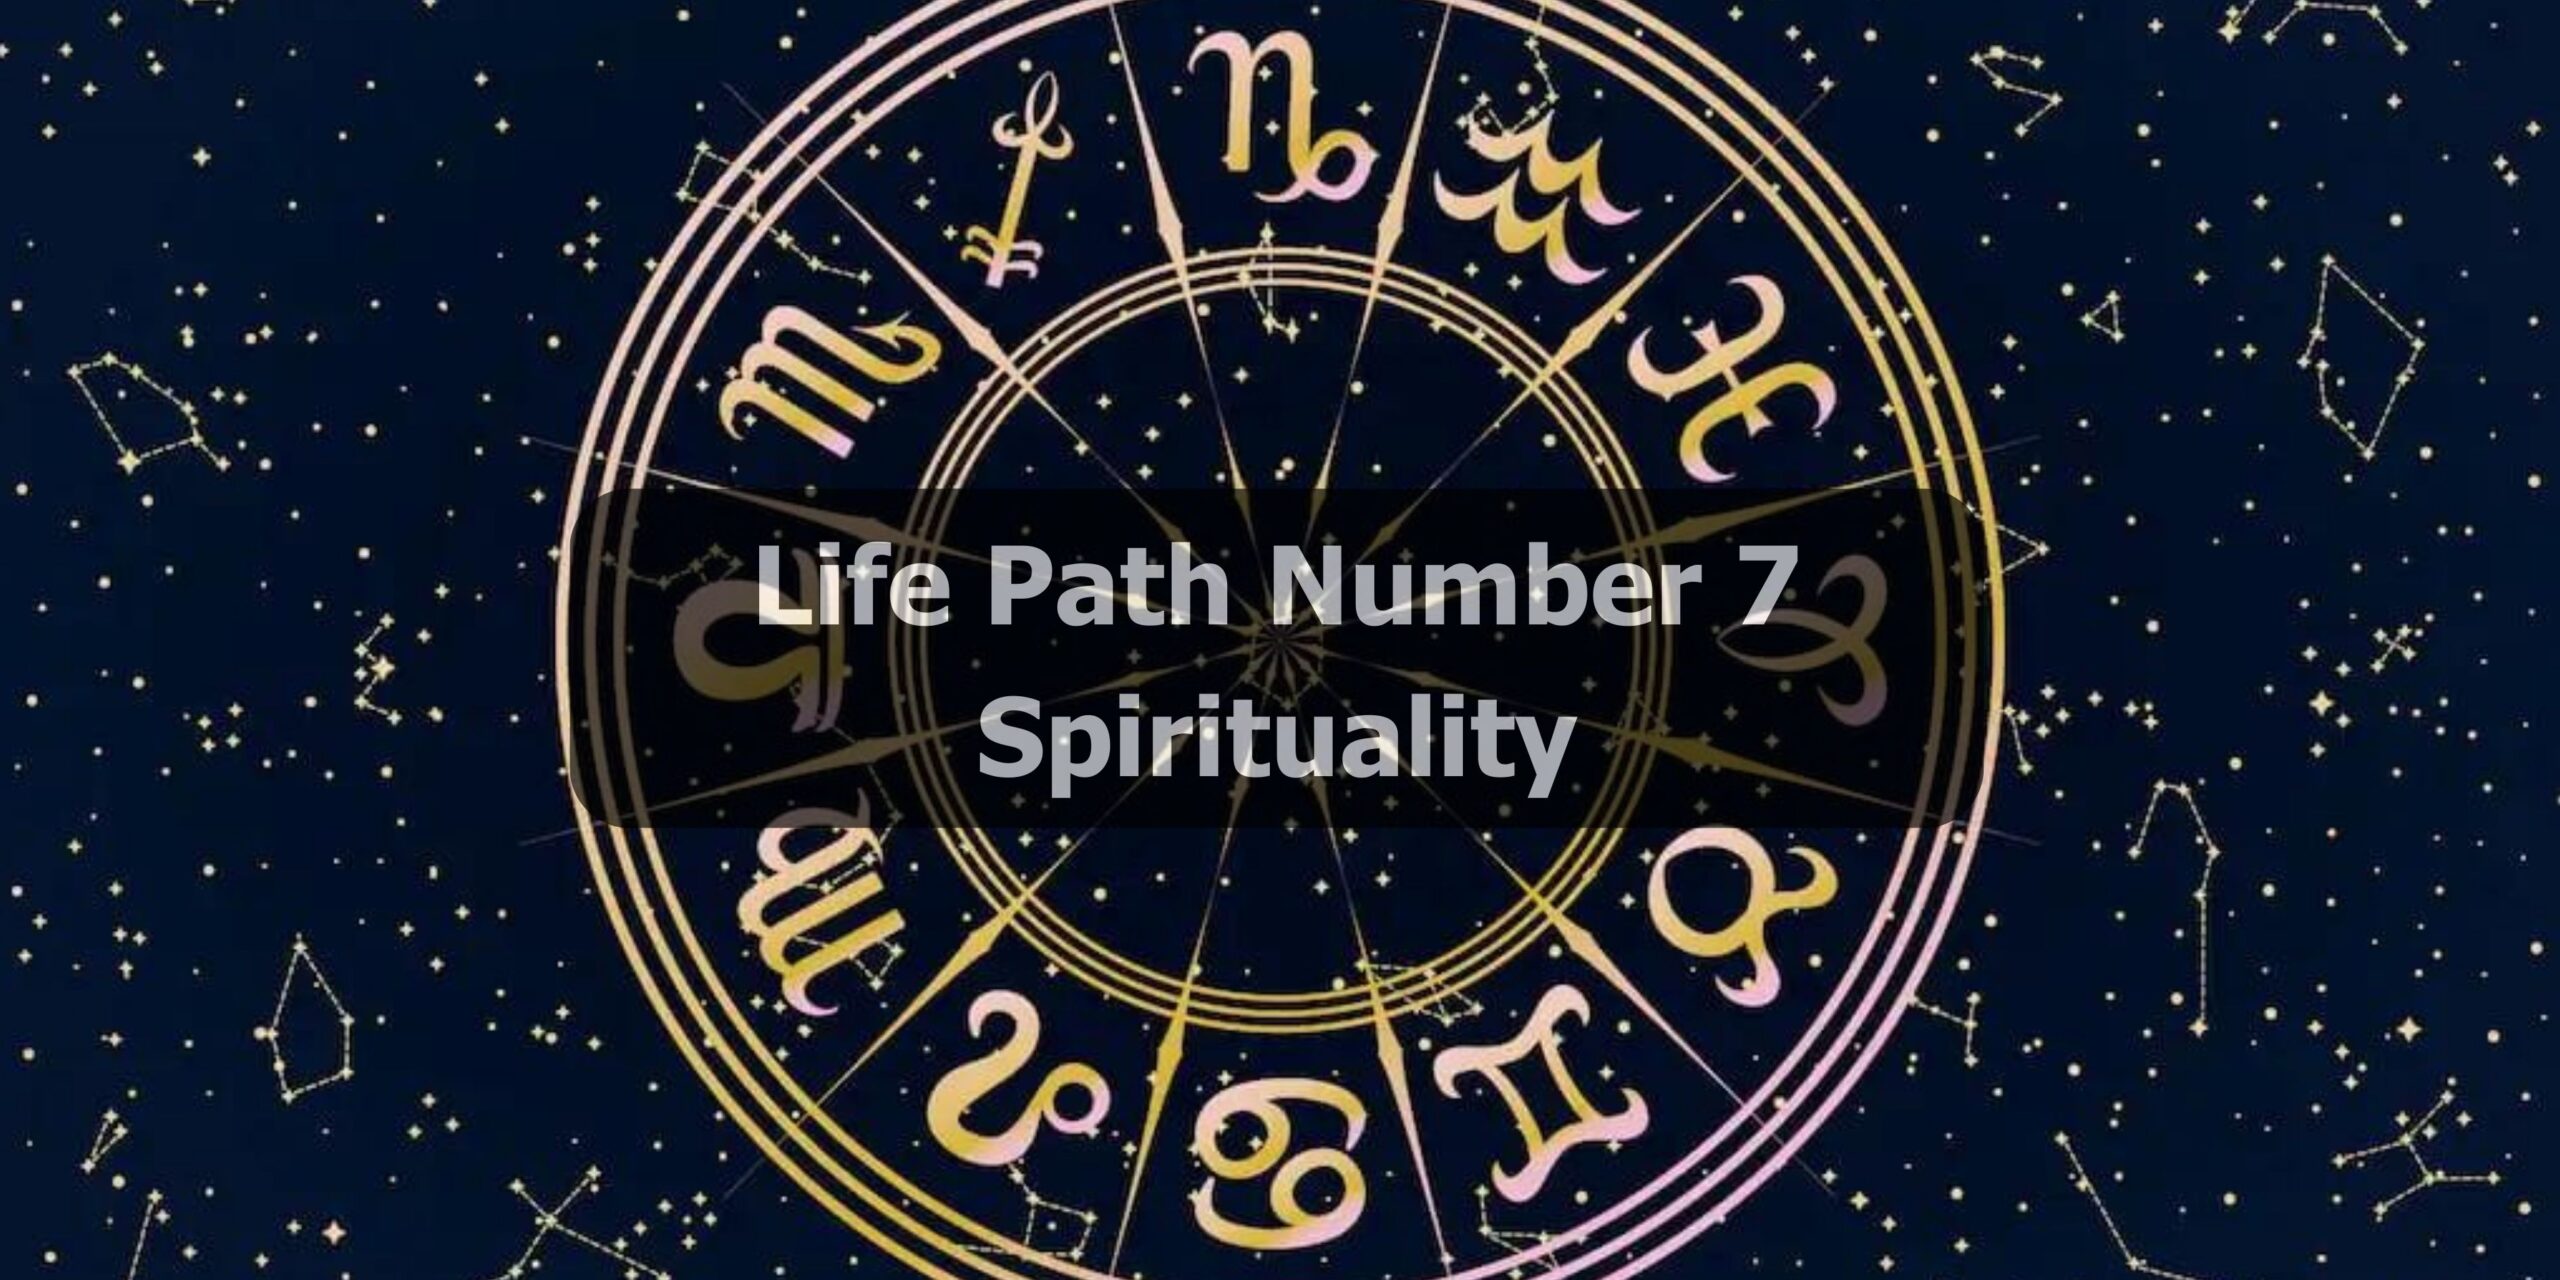 Life Path Number 7 Spirituality